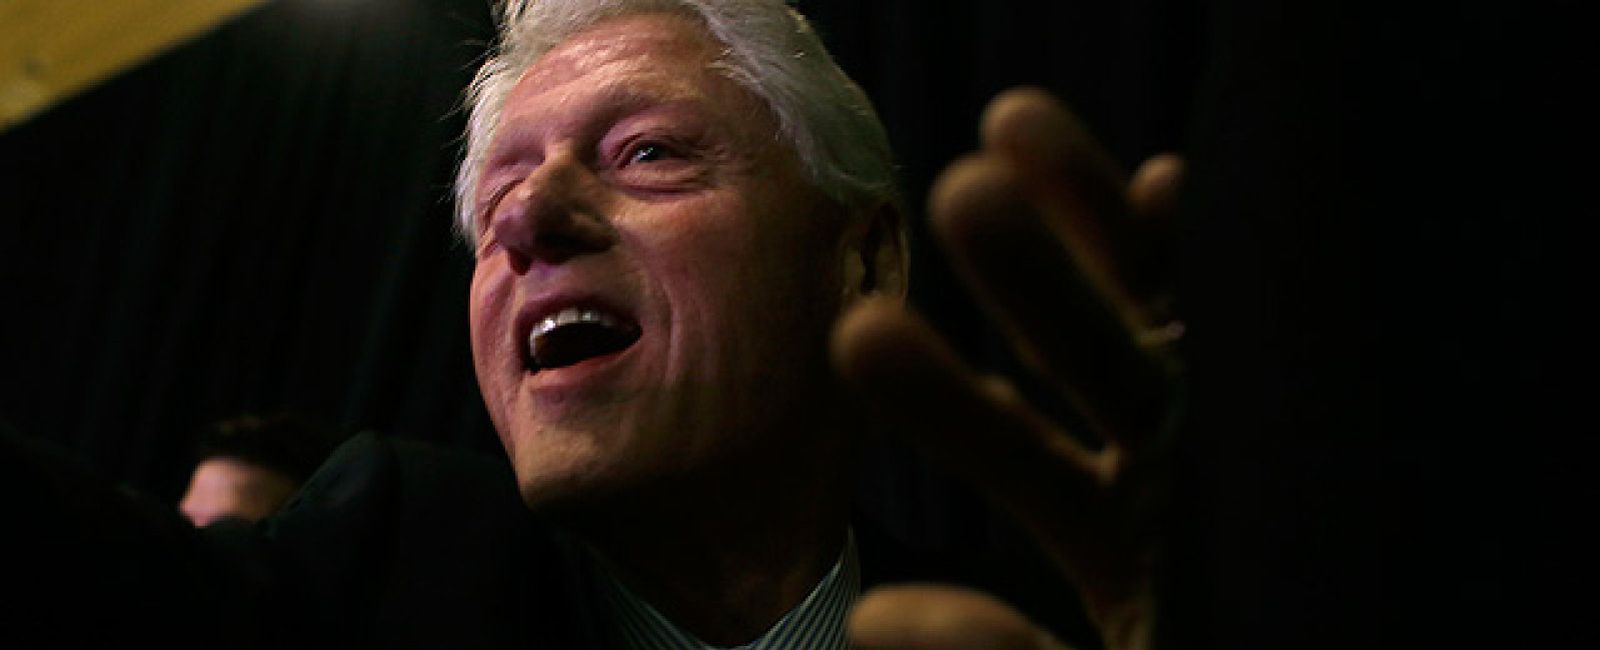 Foto: Un joven emprendedor llamado Bill Clinton